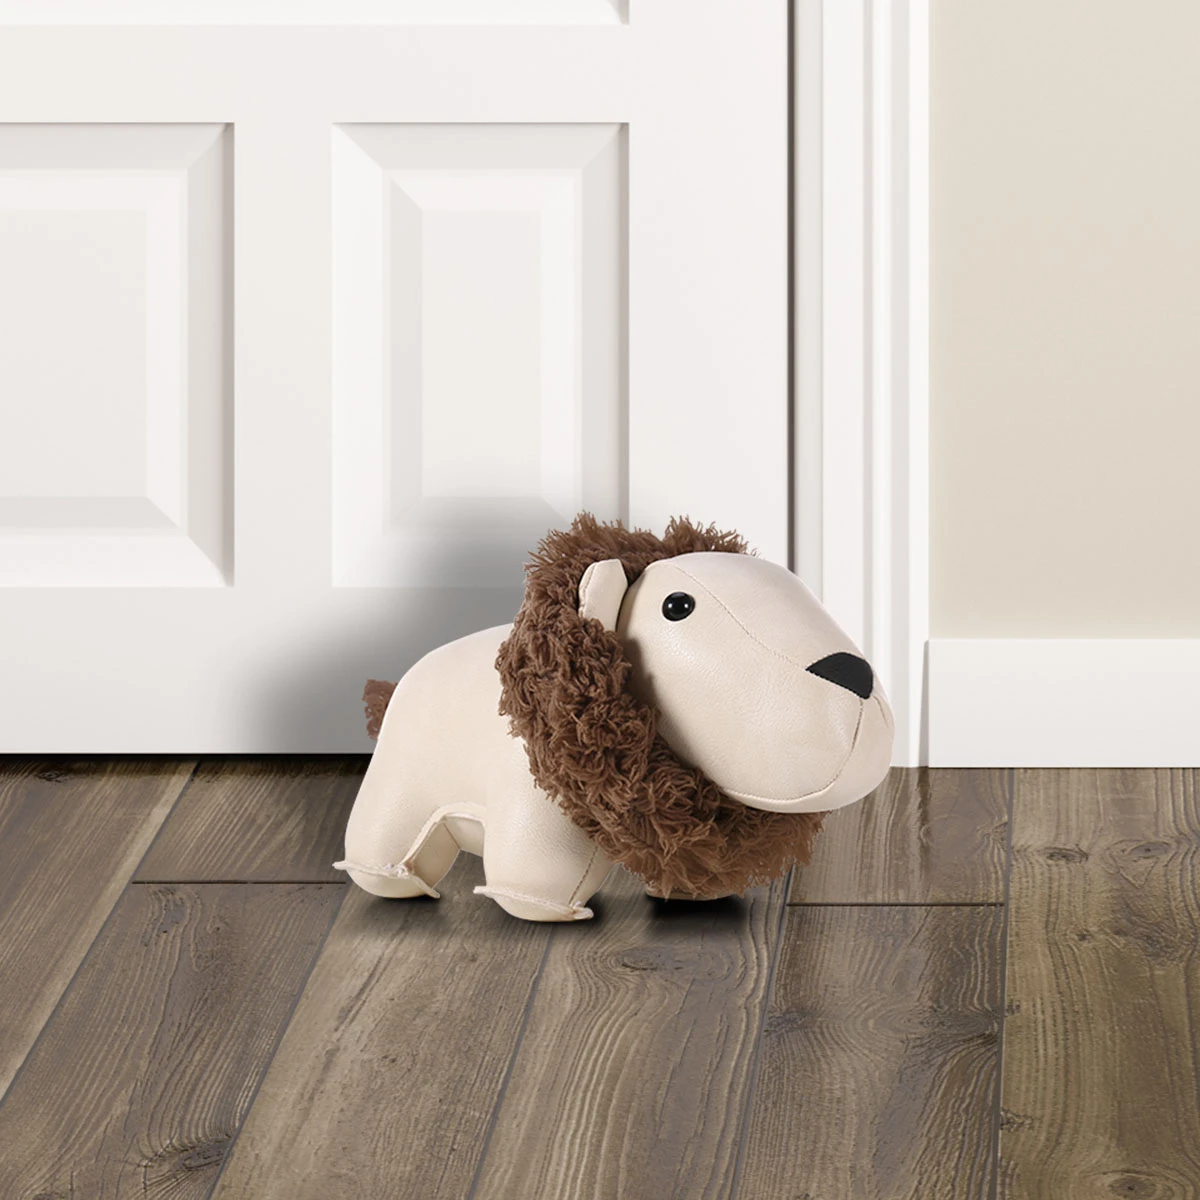 Tooart Lion Bookend Leather Lion Animal Door Stopper Cute Household Doorstop for Bedroom Living Room 